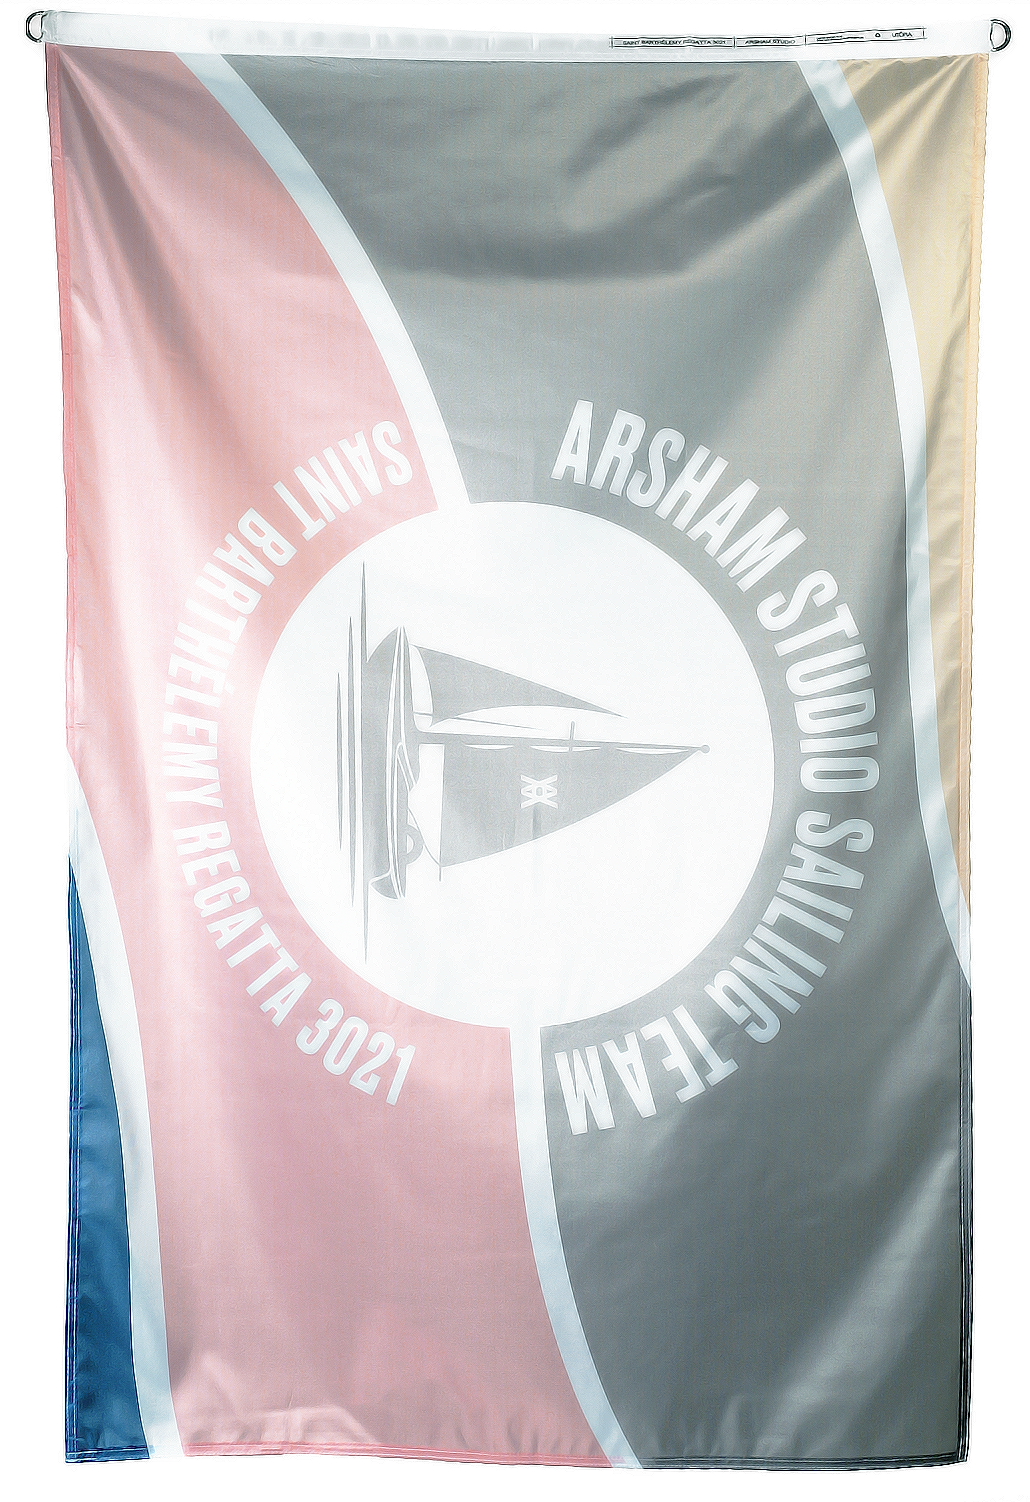 Arsham Studio x Utopia Sailing Team 3021 - St Barths Regatta Flag - Daniel Arsham for Oetker Collection Hotels Boutique